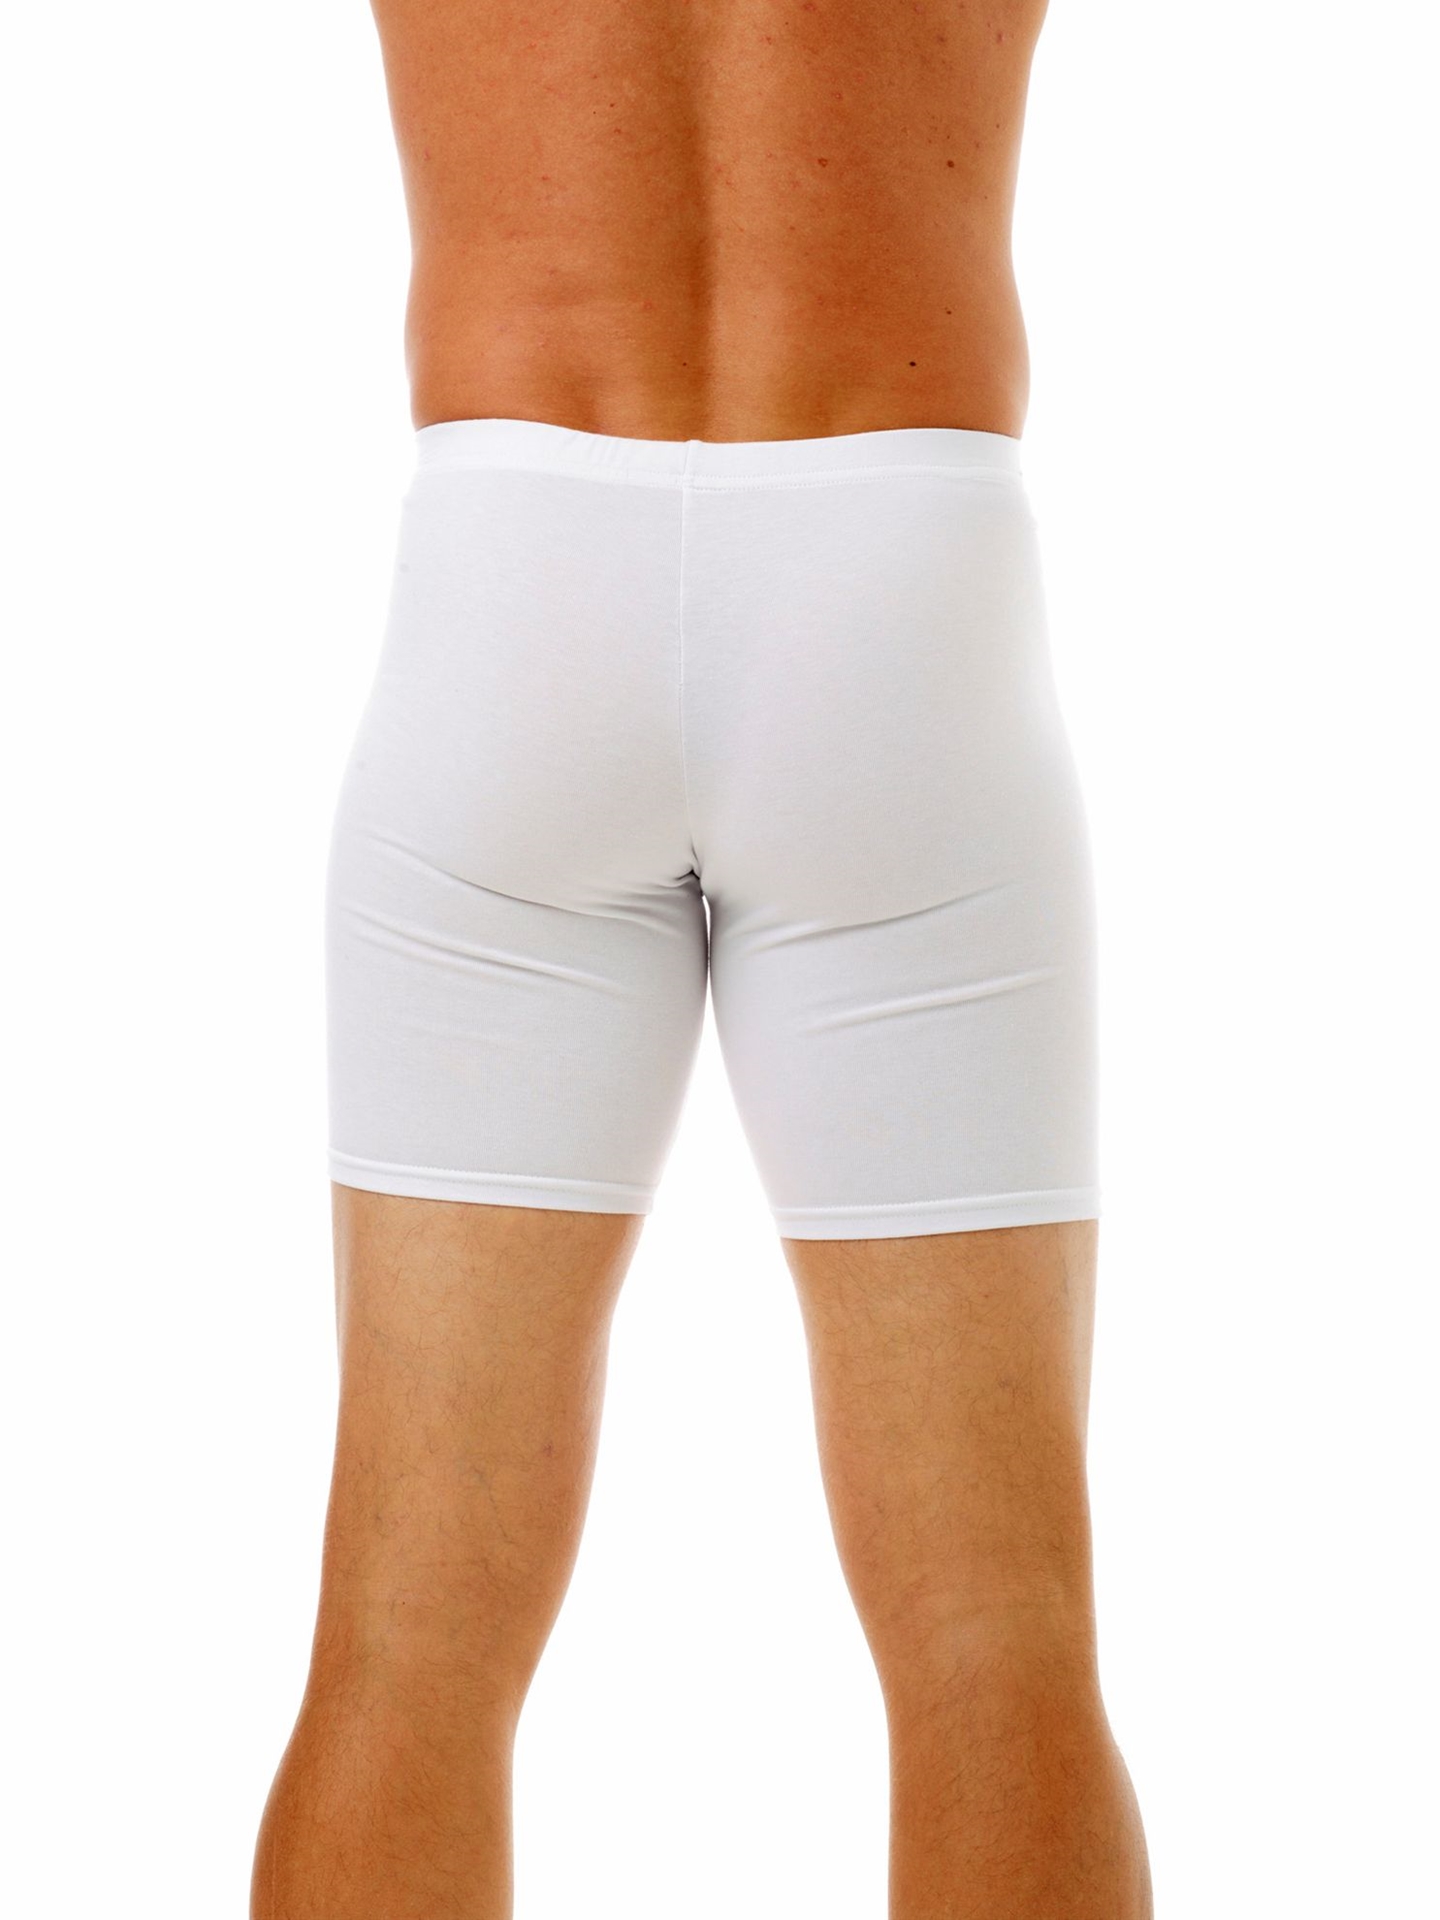 https://www.underworks.com/images/thumbs/0000139_mens-cotton-spandex-long-boxer-underwear.jpeg